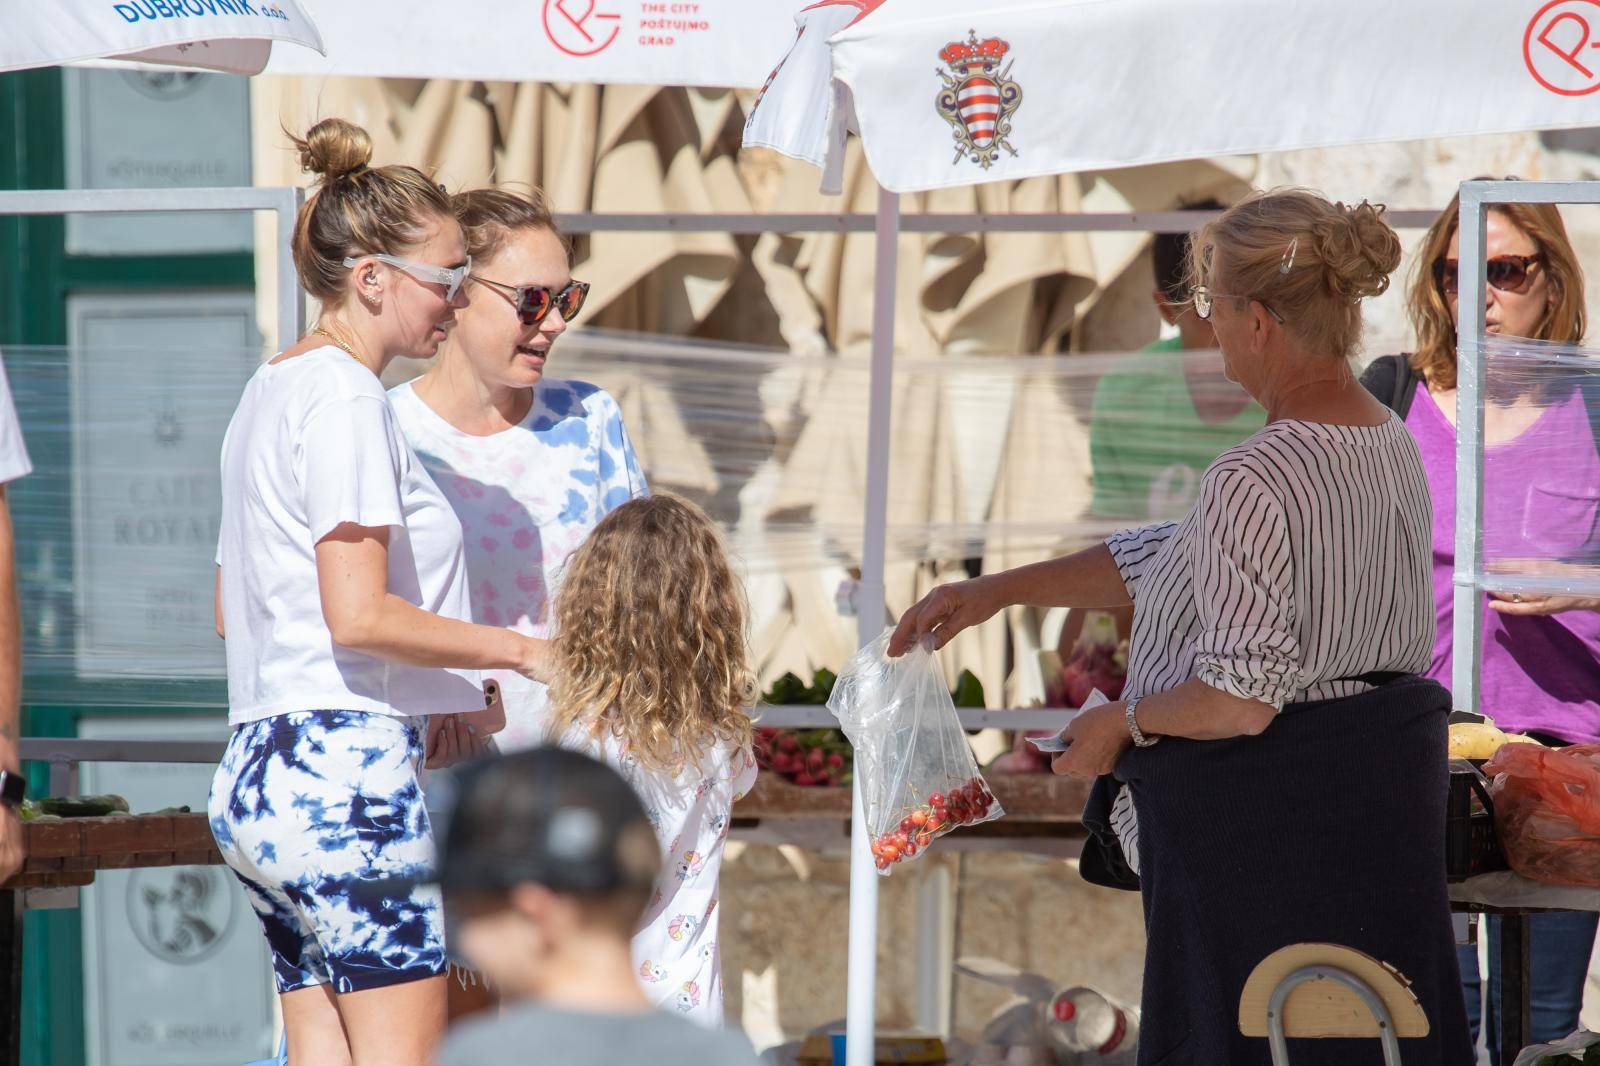 Dubrovnik: Sestre Ecclestone djeci na tržnici kupile trešnje